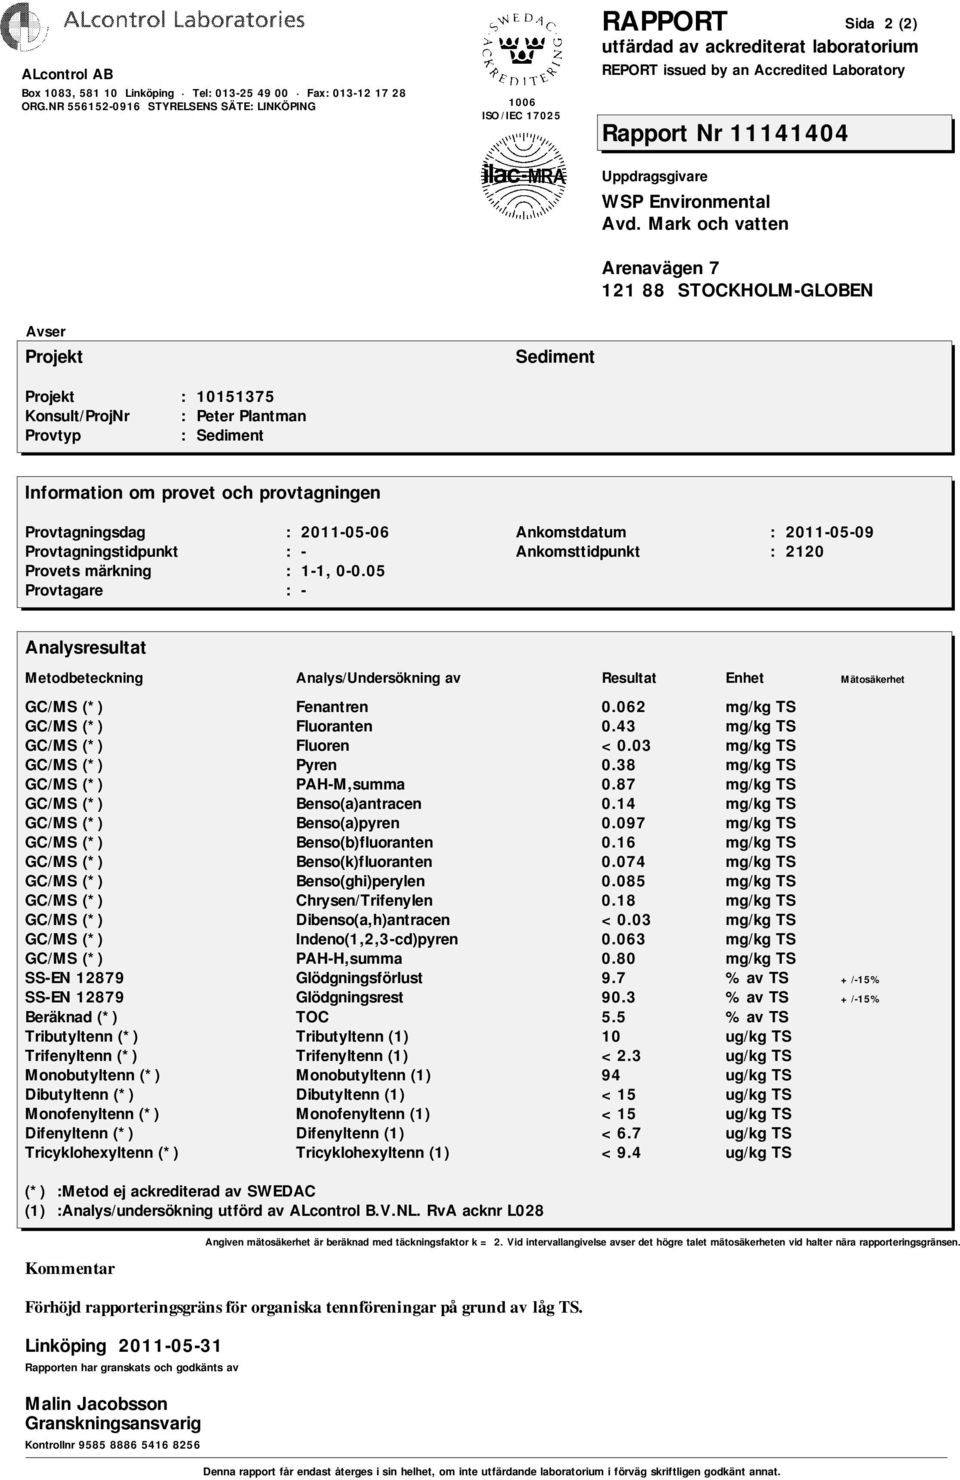 16 mg/kg TS GC/MS (*) Benso(k)fluoranten 0.074 mg/kg TS GC/MS (*) Benso(ghi)perylen 0.085 mg/kg TS GC/MS (*) Chrysen/Trifenylen 0.18 mg/kg TS GC/MS (*) Dibenso(a,h)antracen <0.